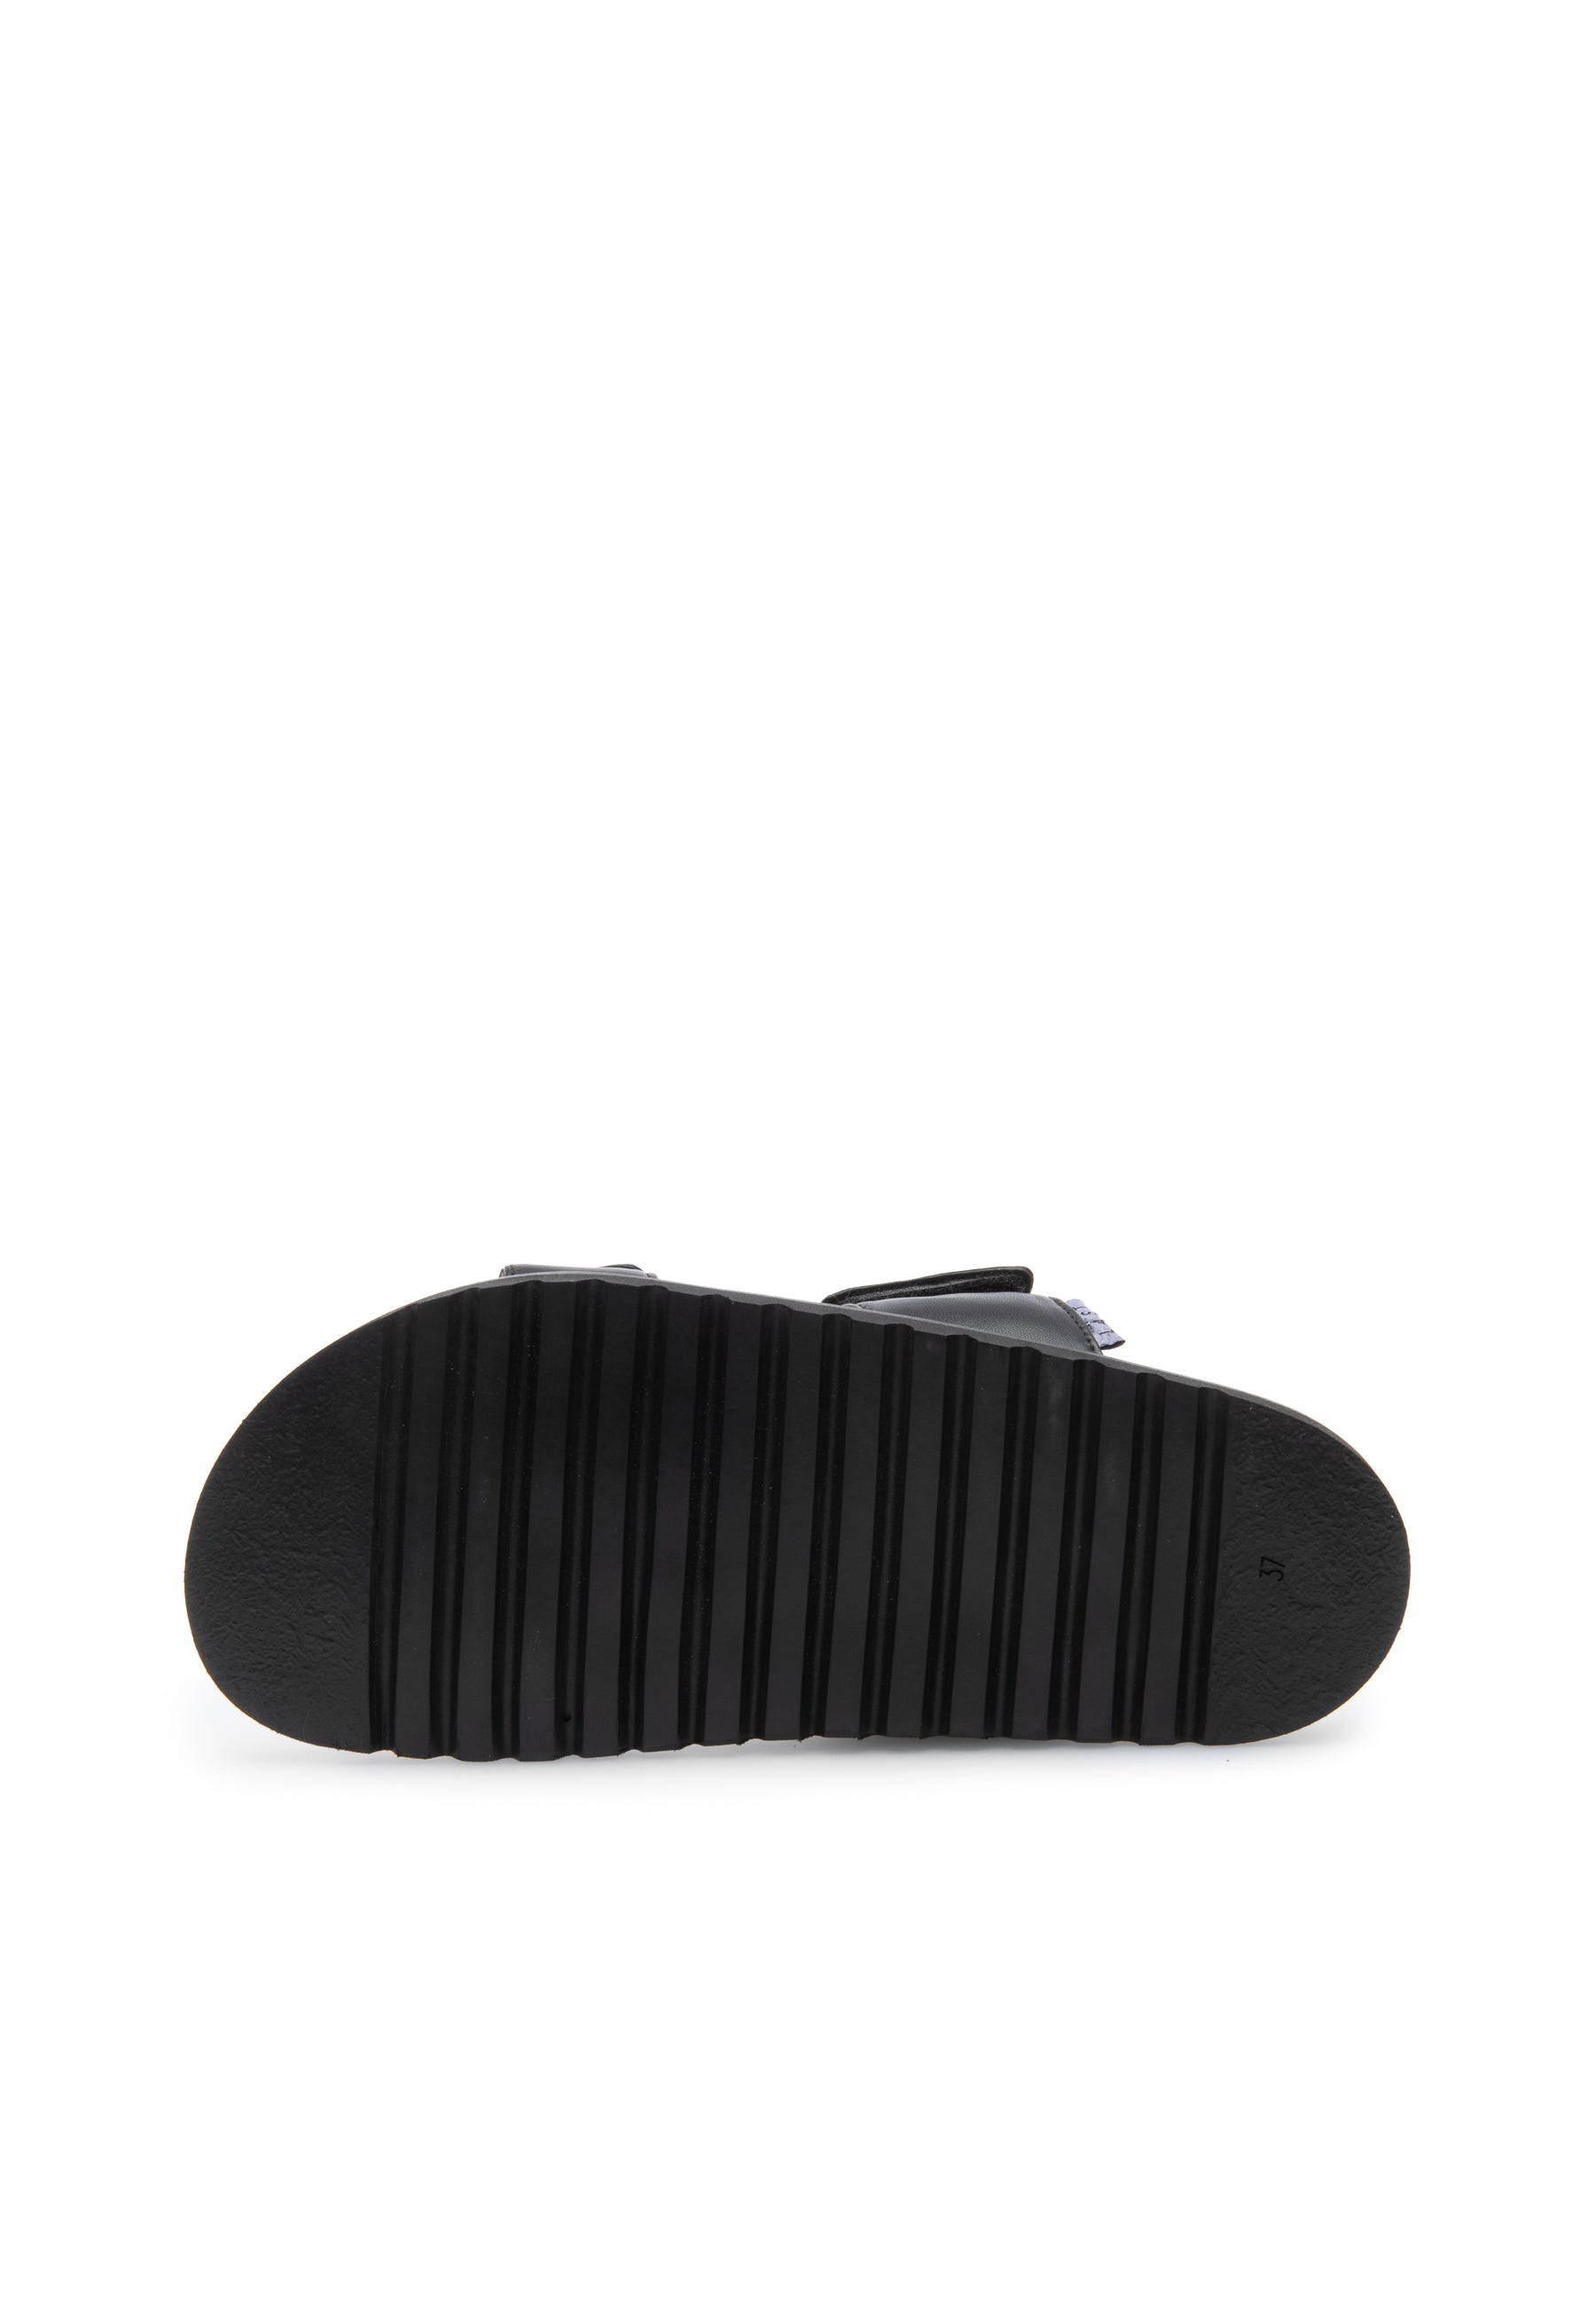 Corine Black Leather Puffy Sandals LAST1516 - 7